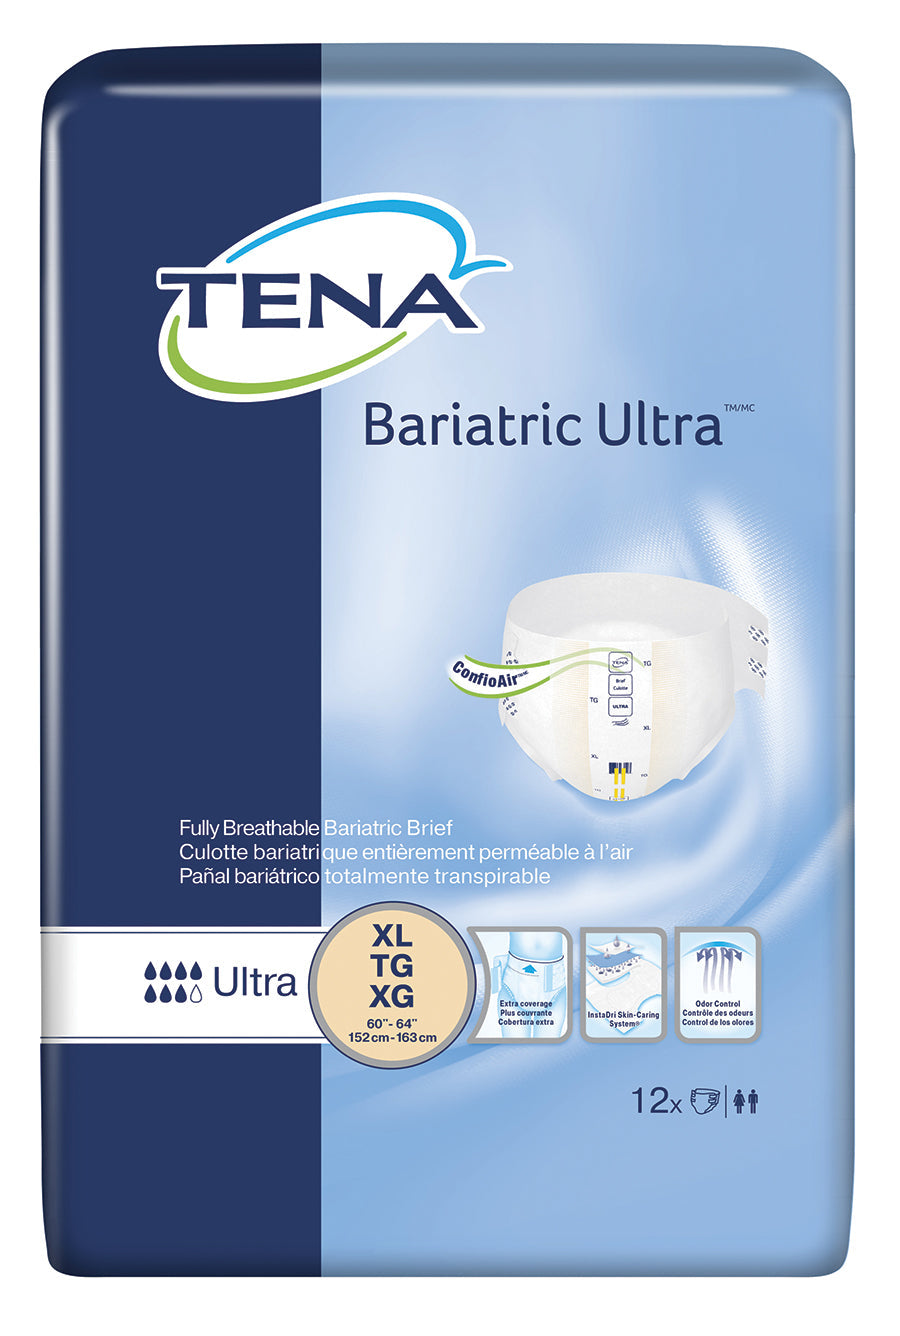 TENA Bariatric Ultra (XL) Brief